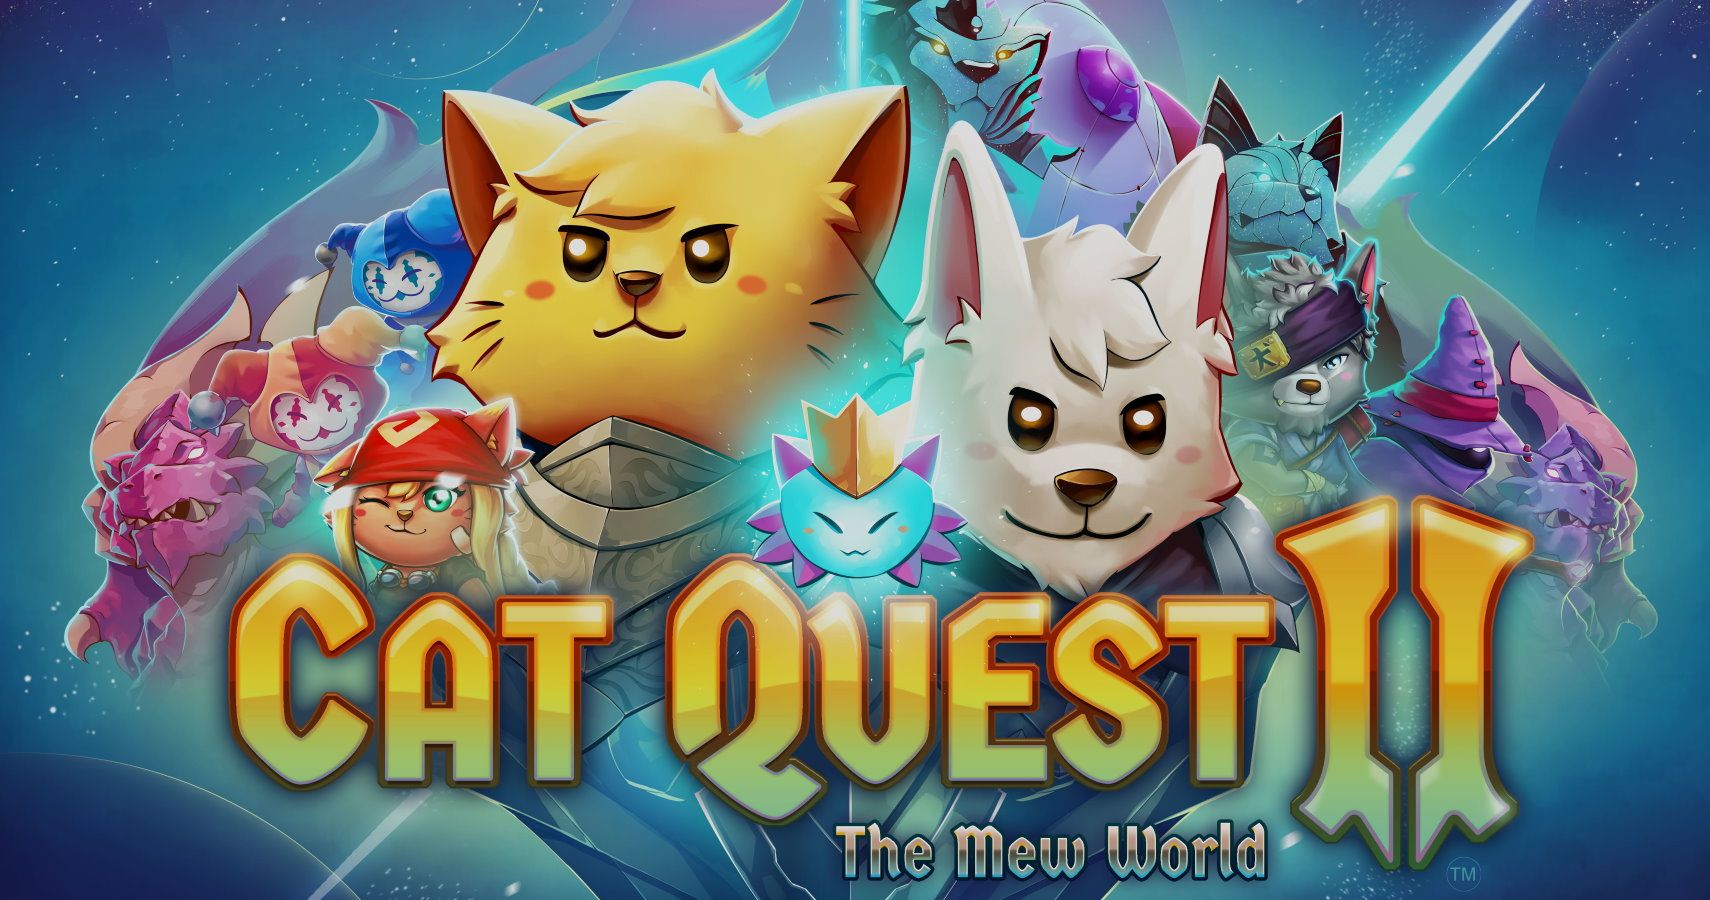 Cat Quest I & II Sells 13 Million Units As Of International Cat Day